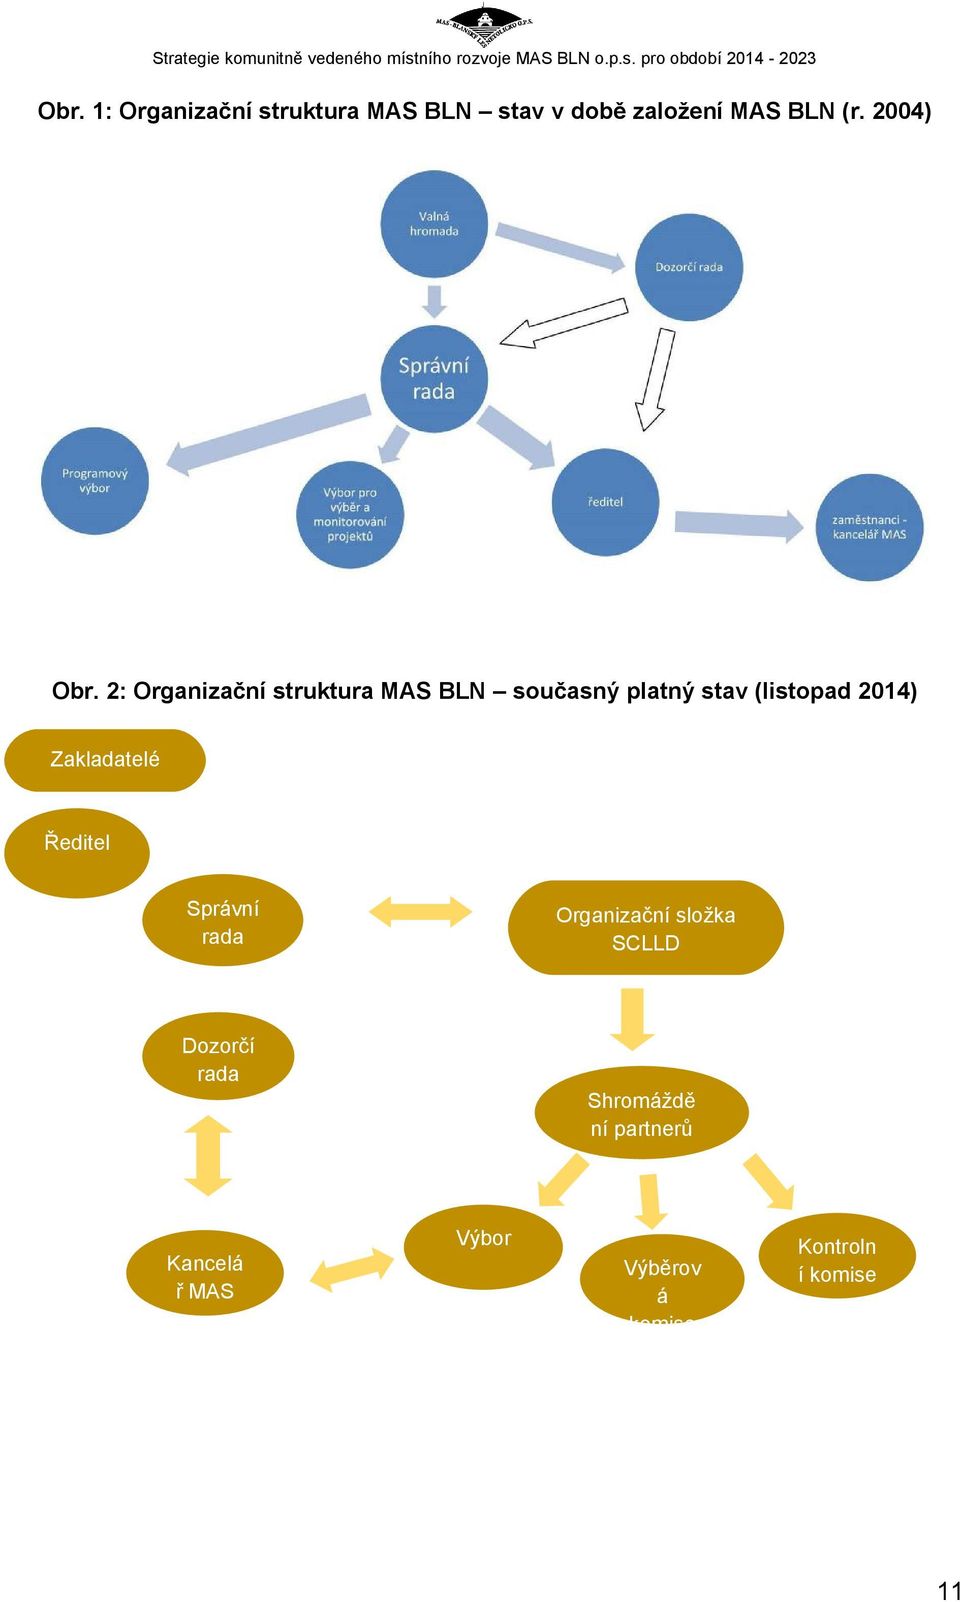 2: Organizační struktura MAS BLN současný platný stav (listopad 2014)